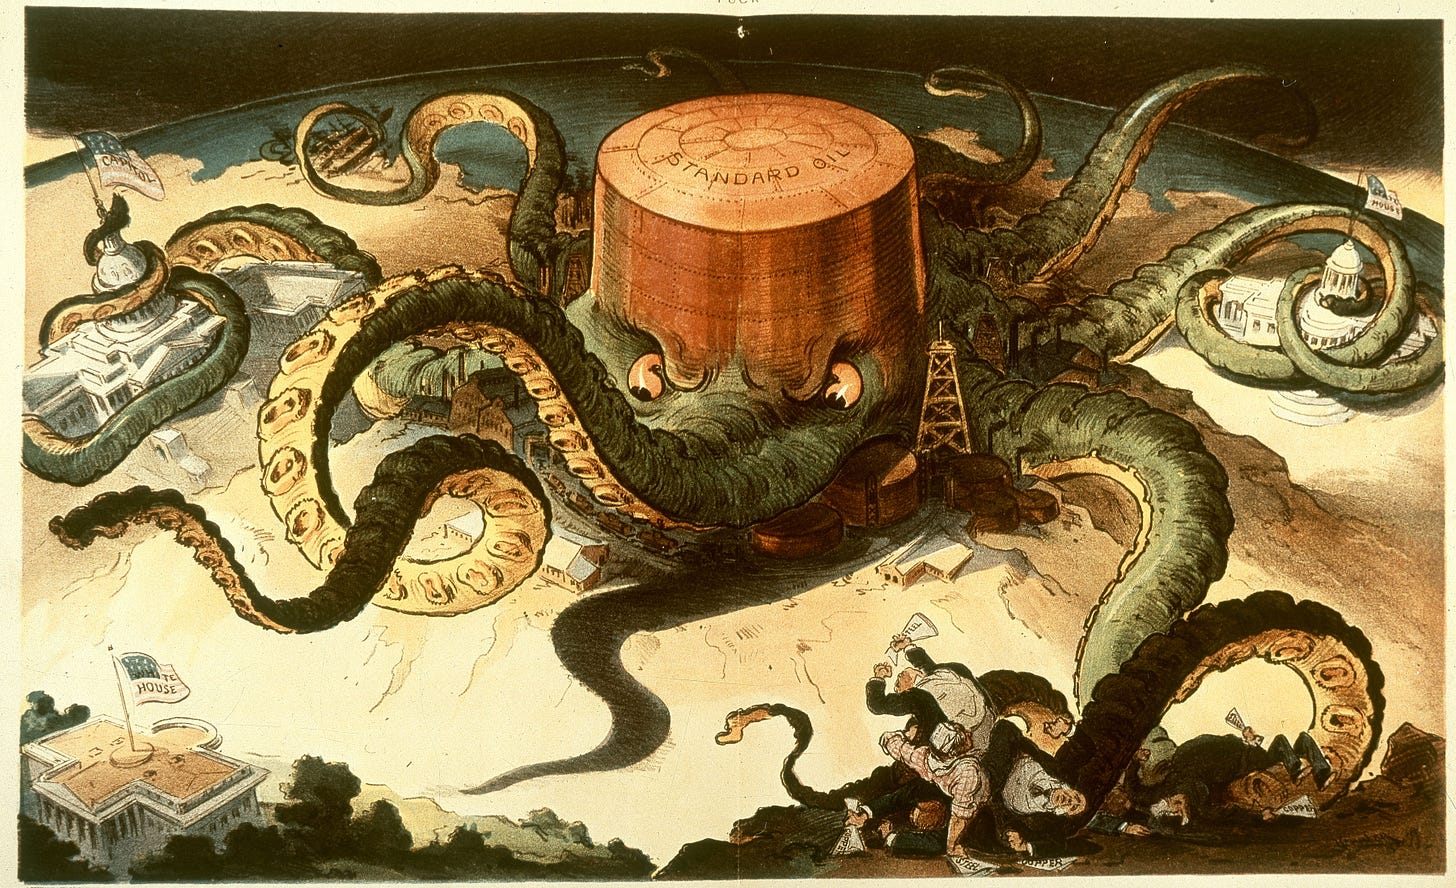 File:Standard oil octopus loc color.jpg - Wikimedia Commons